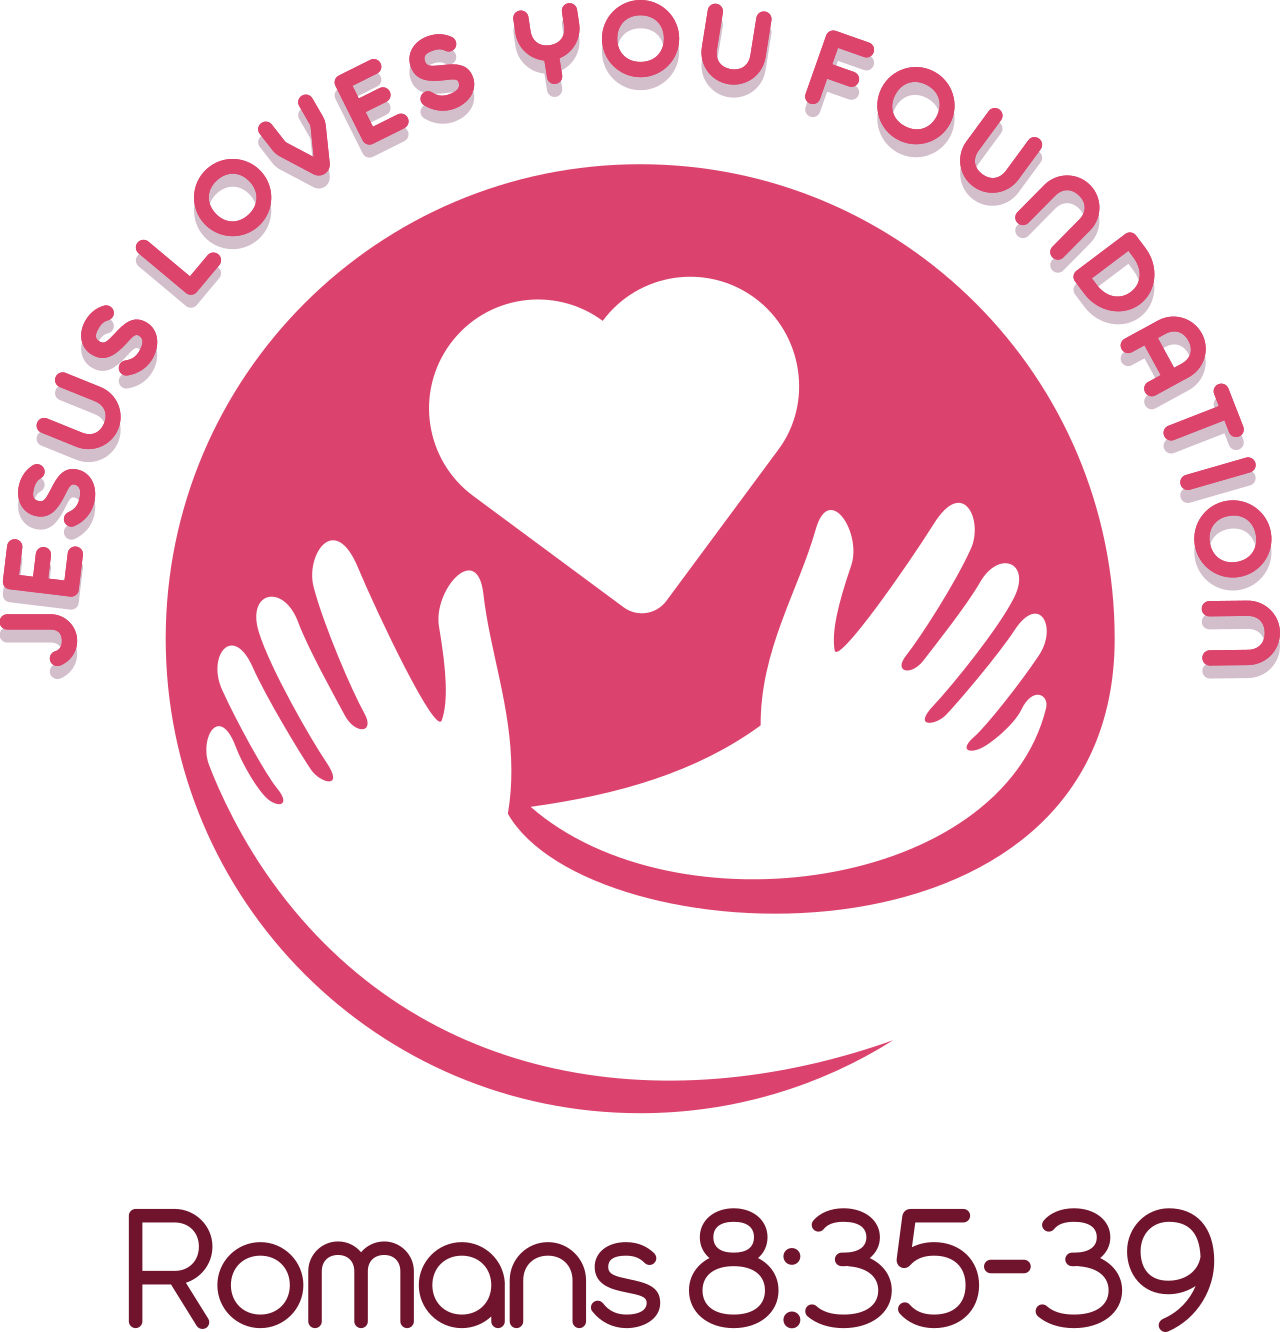 JESUS LOVES YOU FOUNDATION's logo